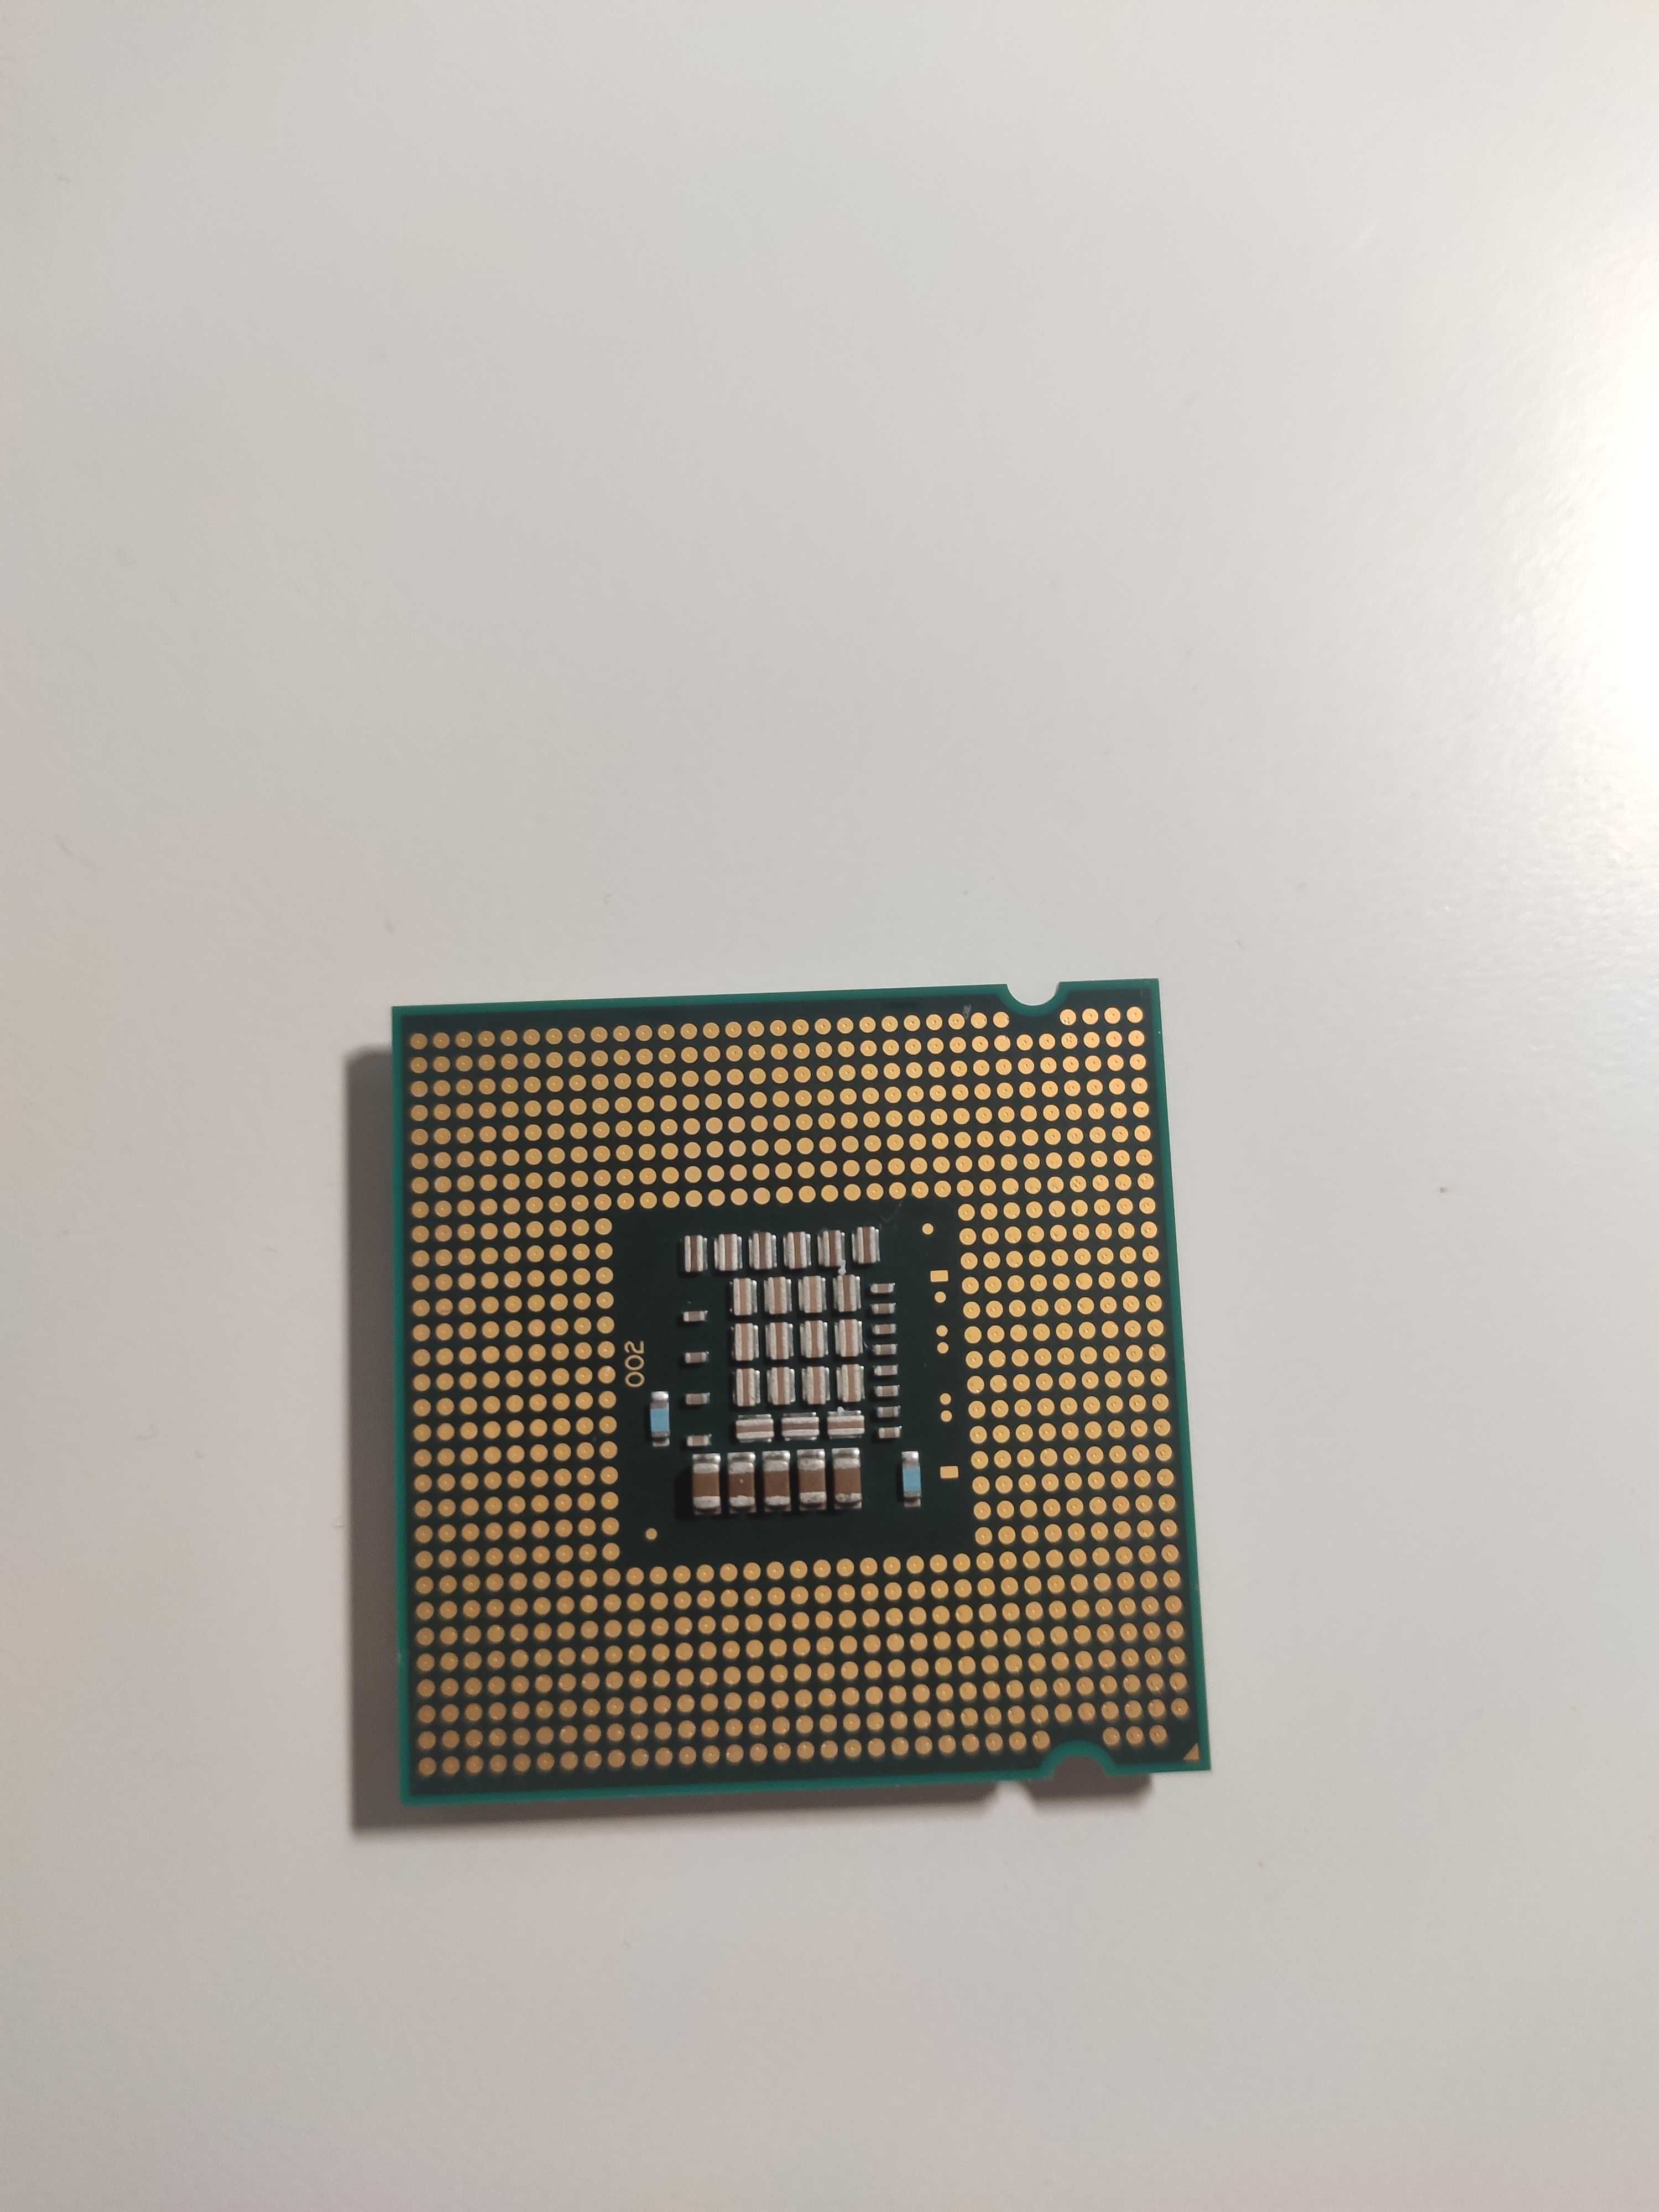 Processador Intel Core 2 Duo E8400 3GHZ